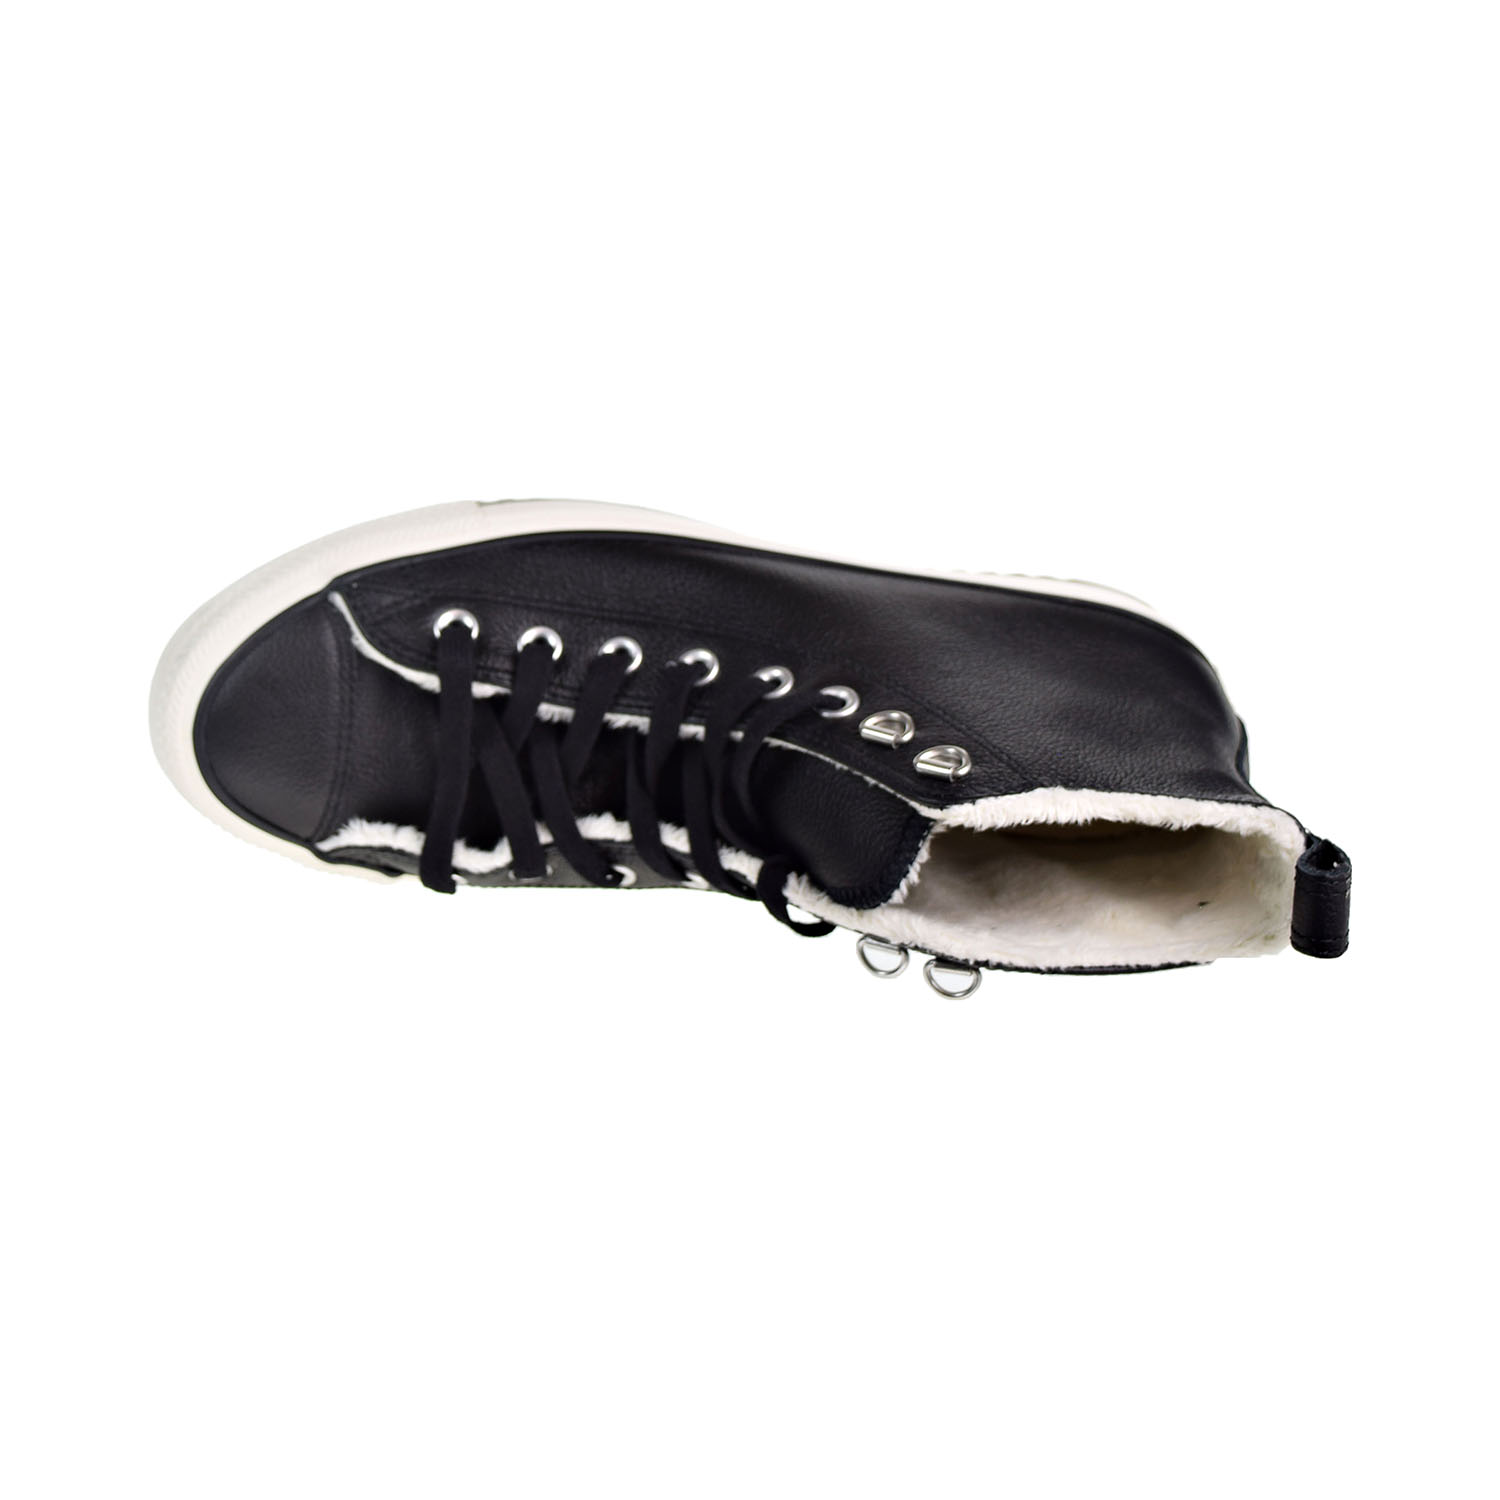 Converse Chuck Taylor All Star Hiker Boot Men's/Big Kids Shoes Black-Egret-Gum 161512c - image 5 of 6